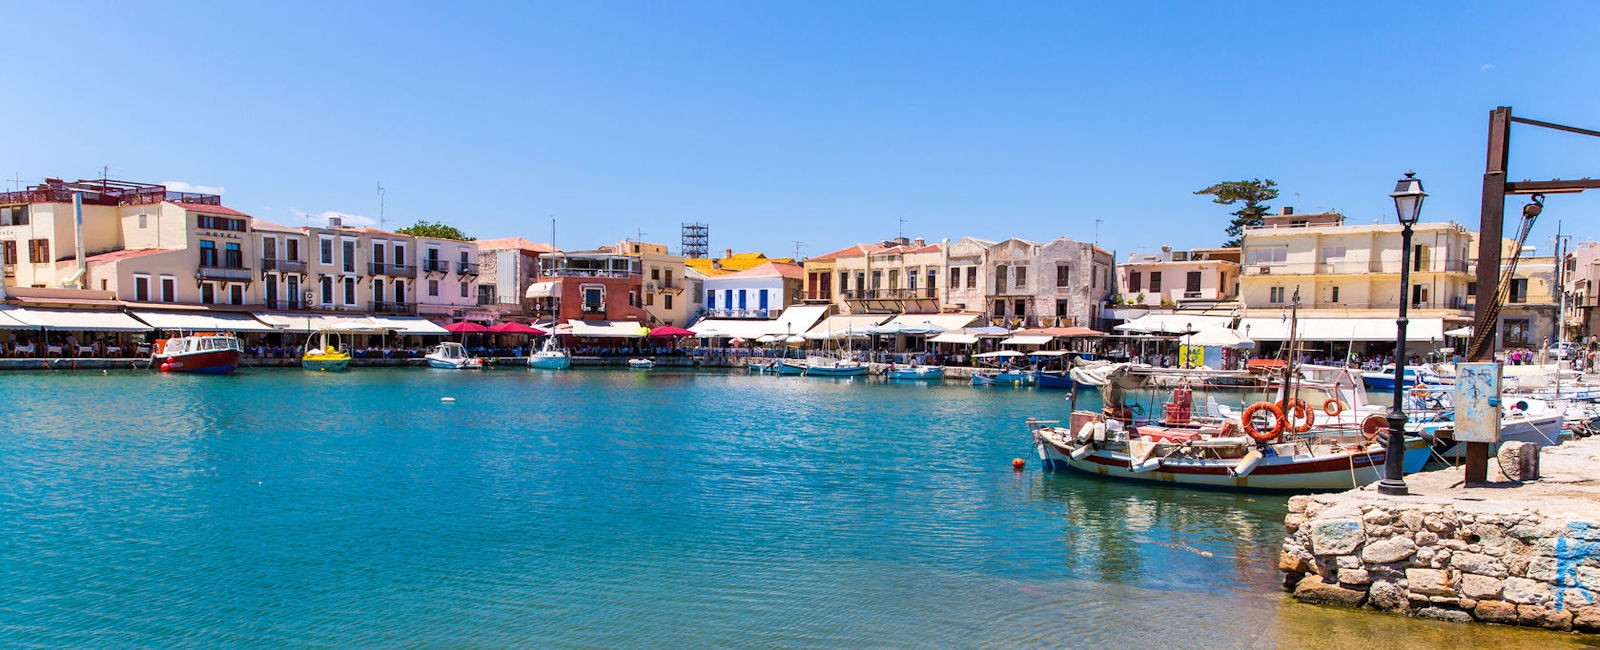 rethymnon town, crete